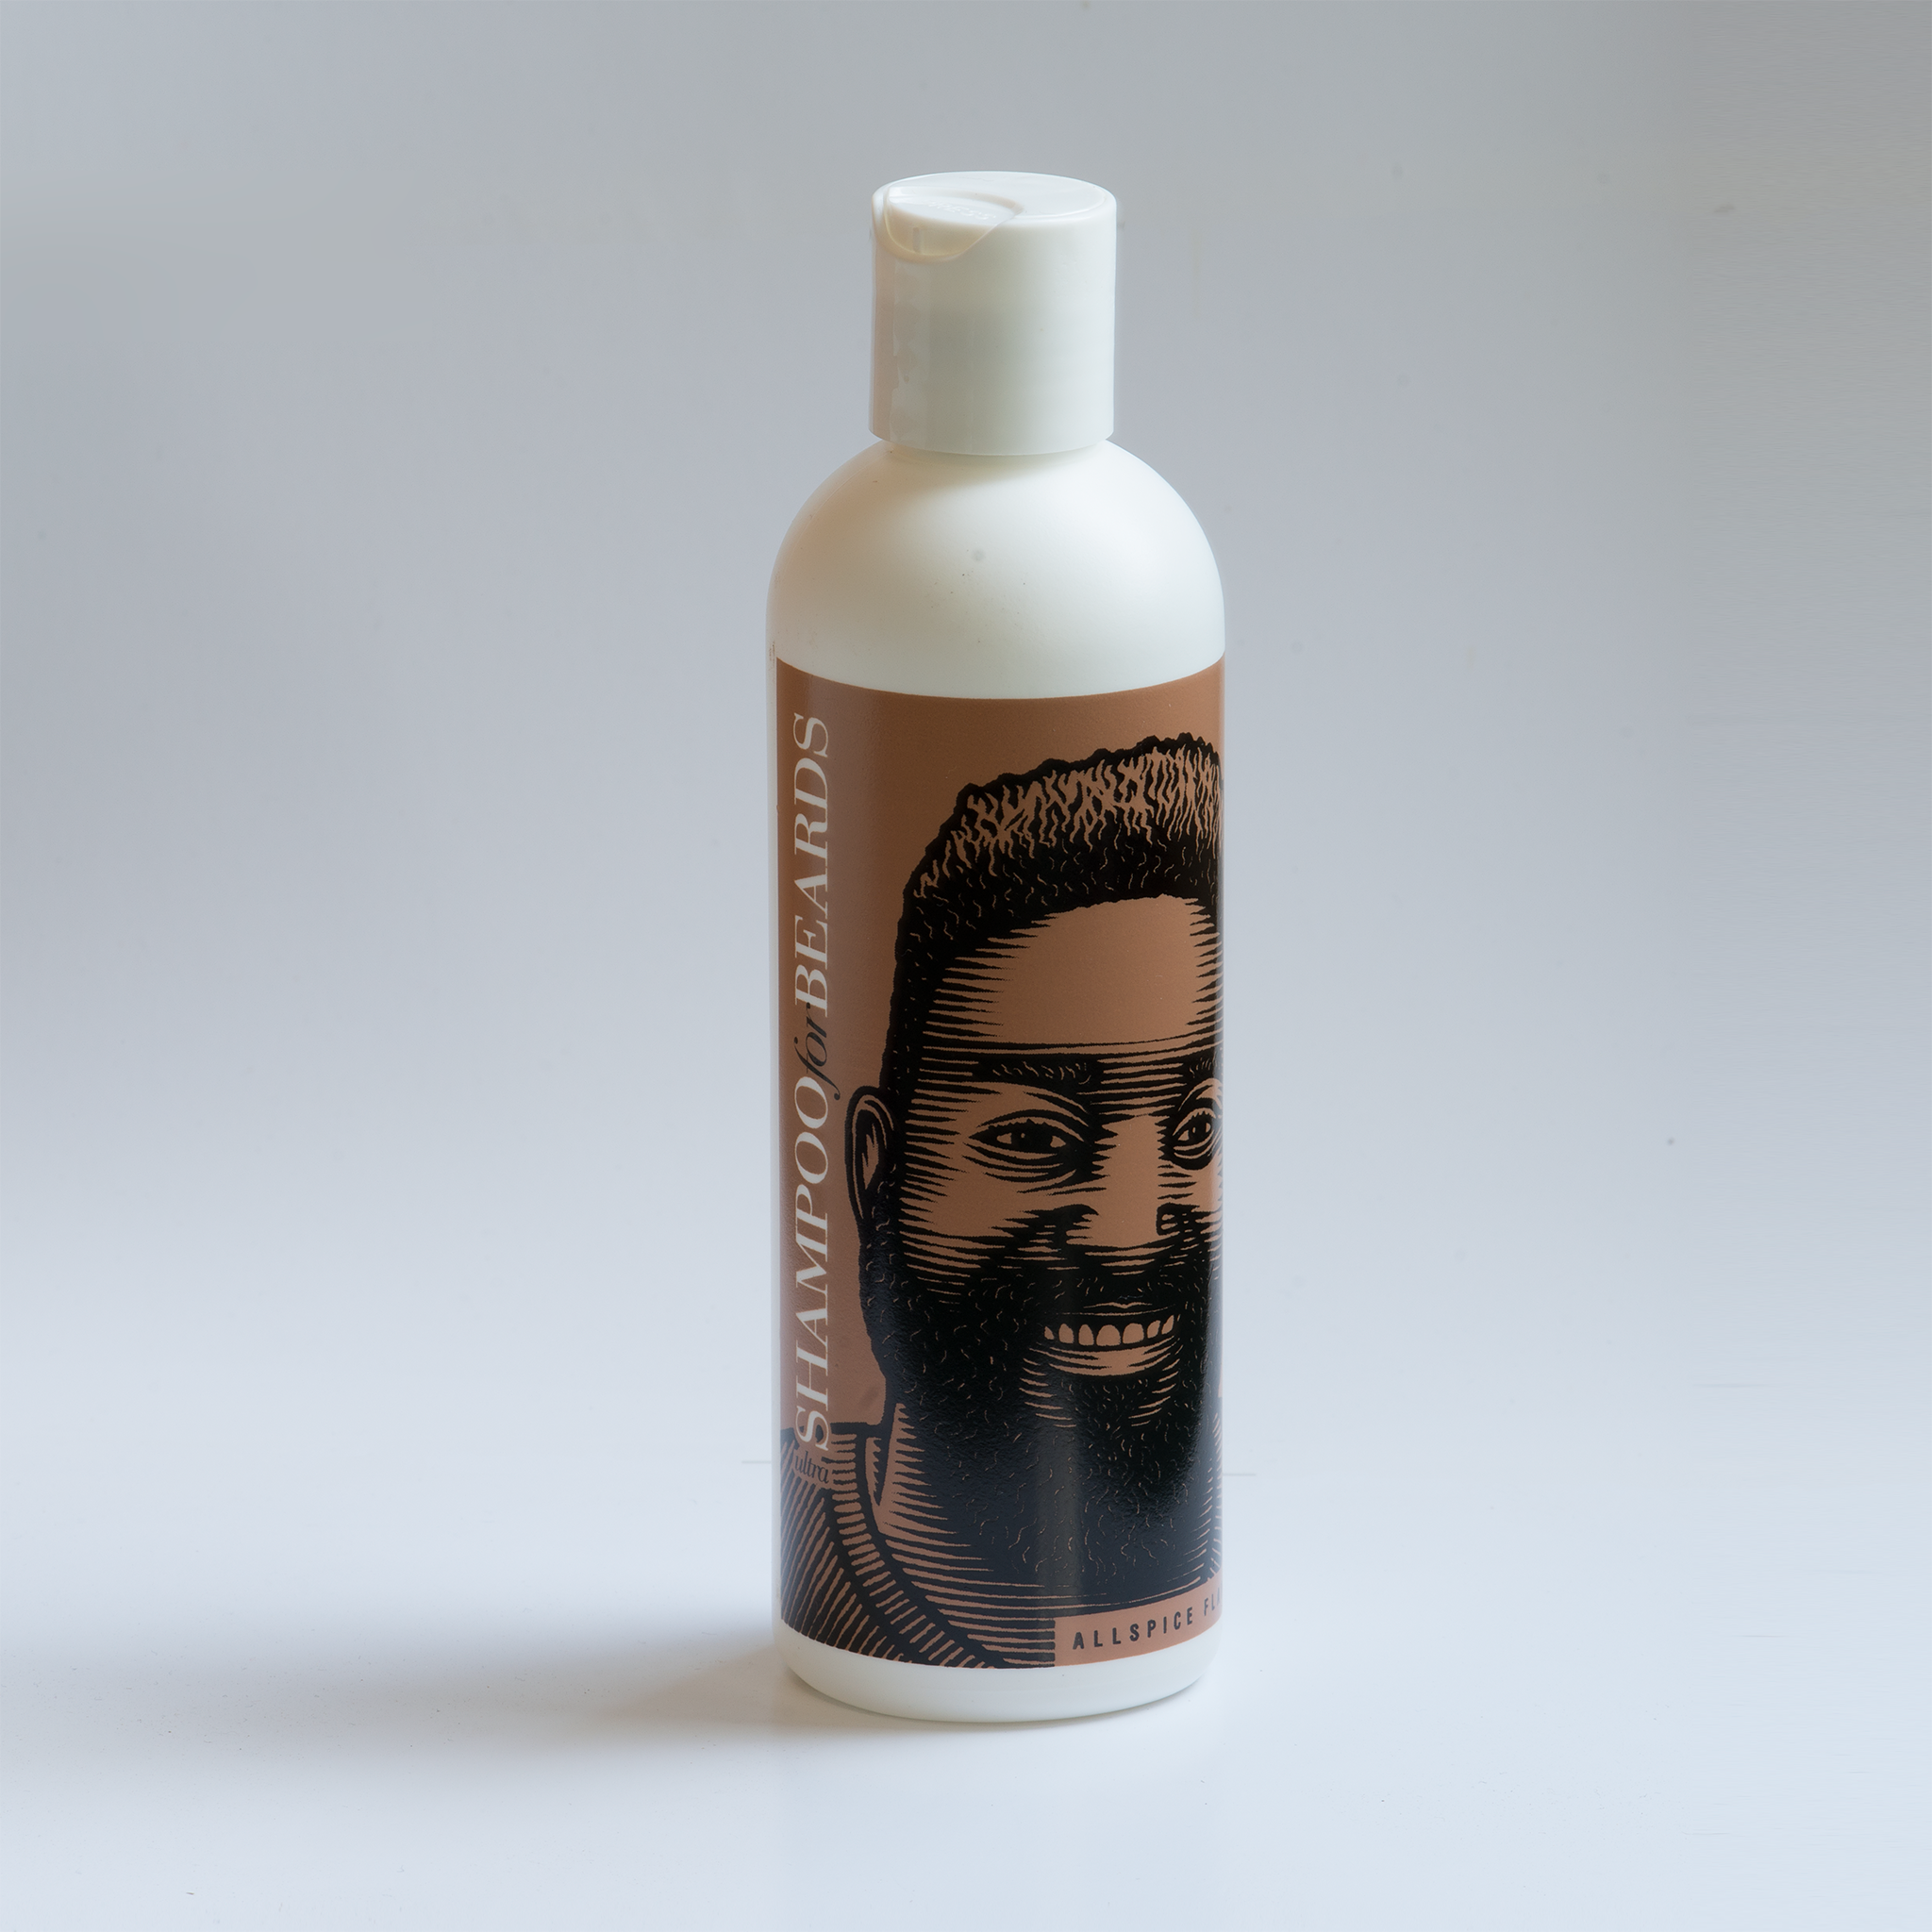 Beardsley Ultra Shampoo for Beards Allspice flavor